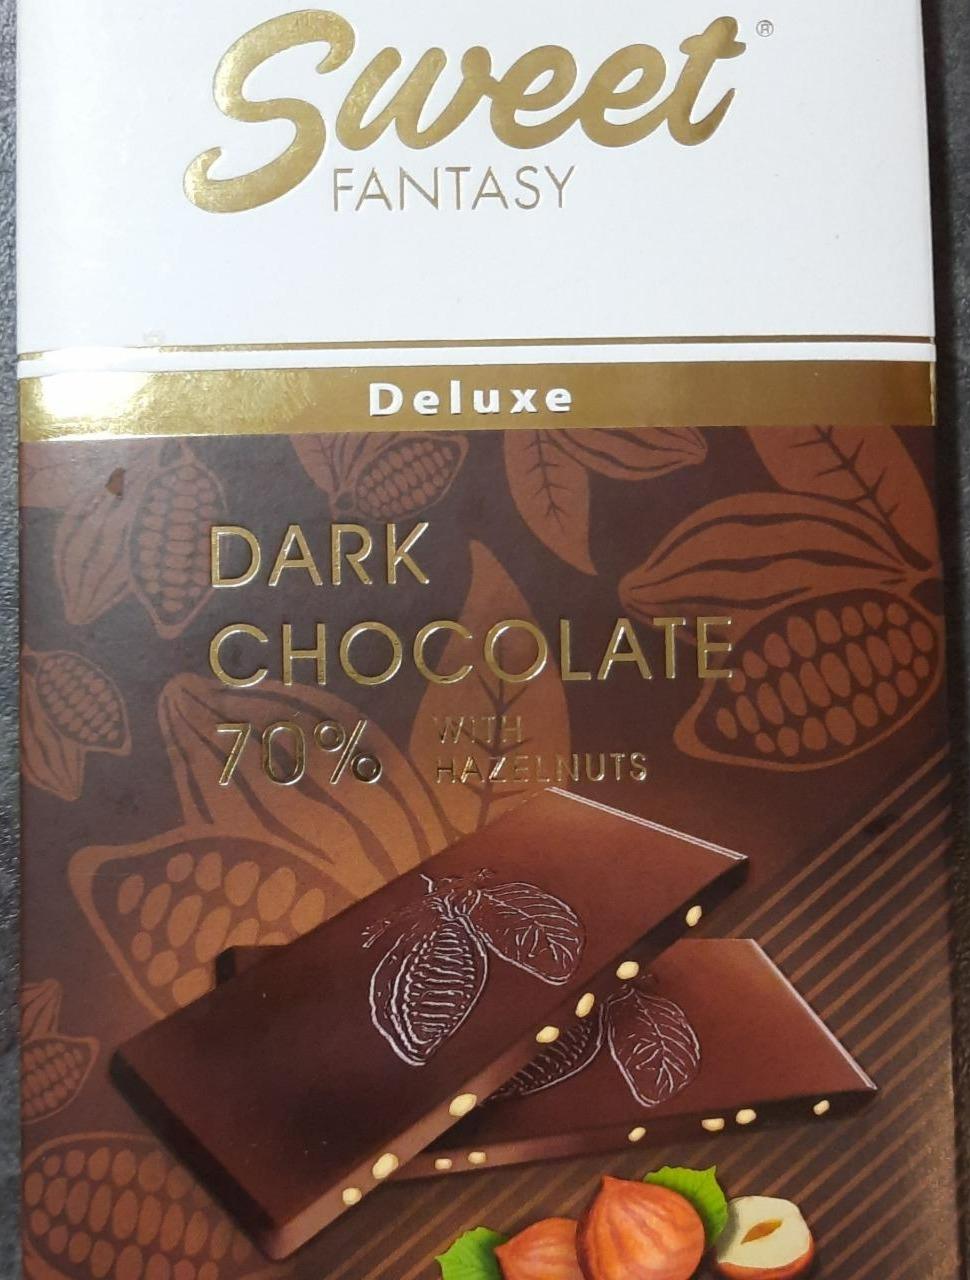 Fotografie - Deluxe Dark chocolate 70% with hazelnuts Sweet fantasy